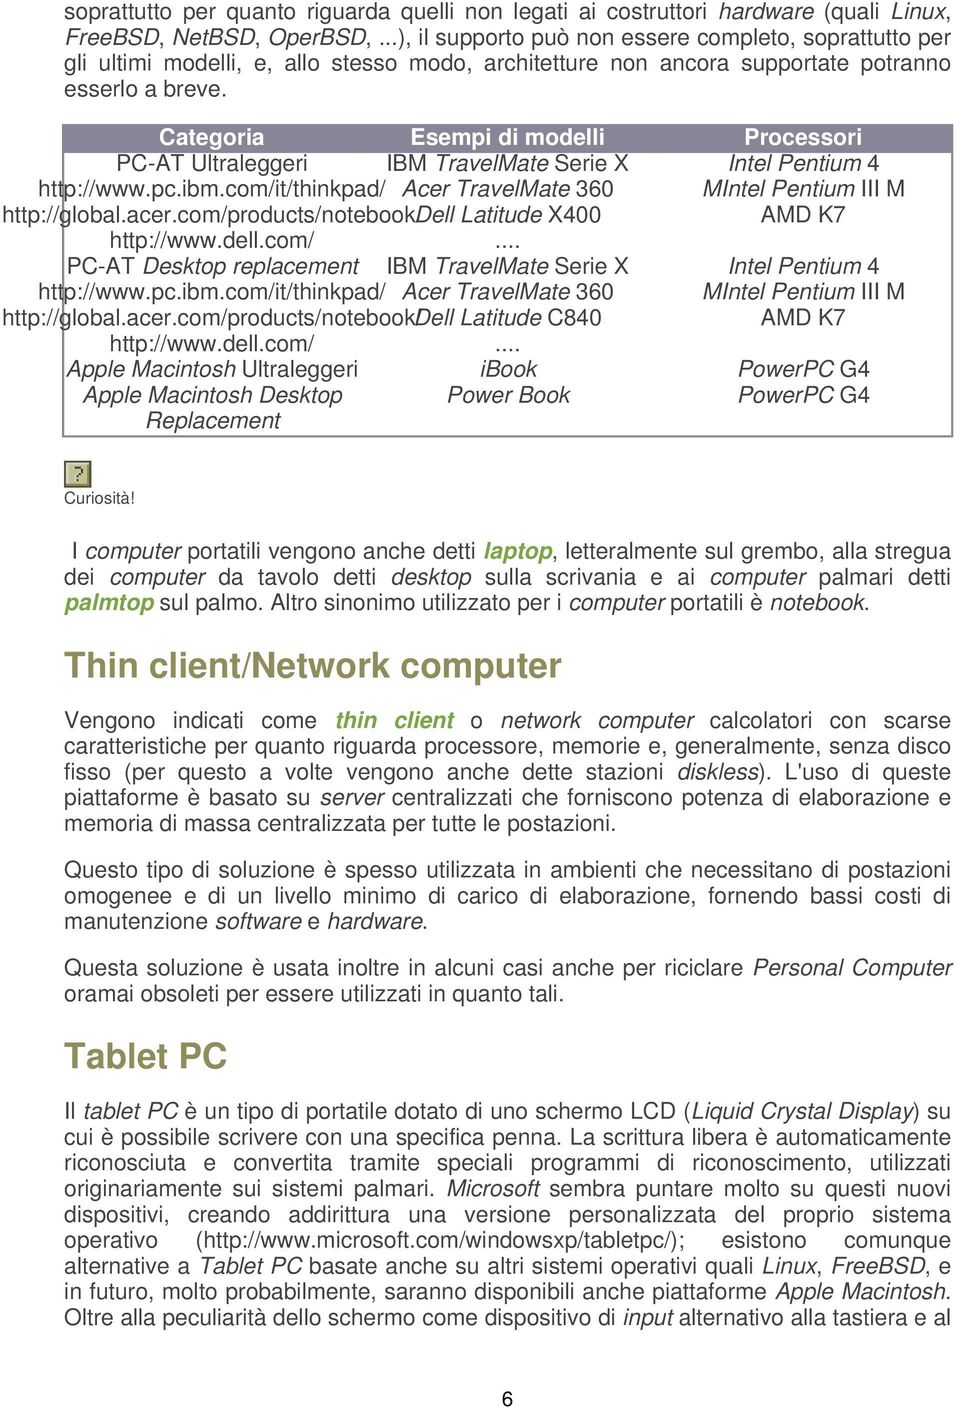 Categoria Esempi di modelli PC-AT Ultraleggeri IBM TravelMate Serie X http://www.pc.ibm.com/it/thinkpad/ Acer TravelMate 360 http://global.acer.com/products/notebook/dell Latitude X400 http://www.